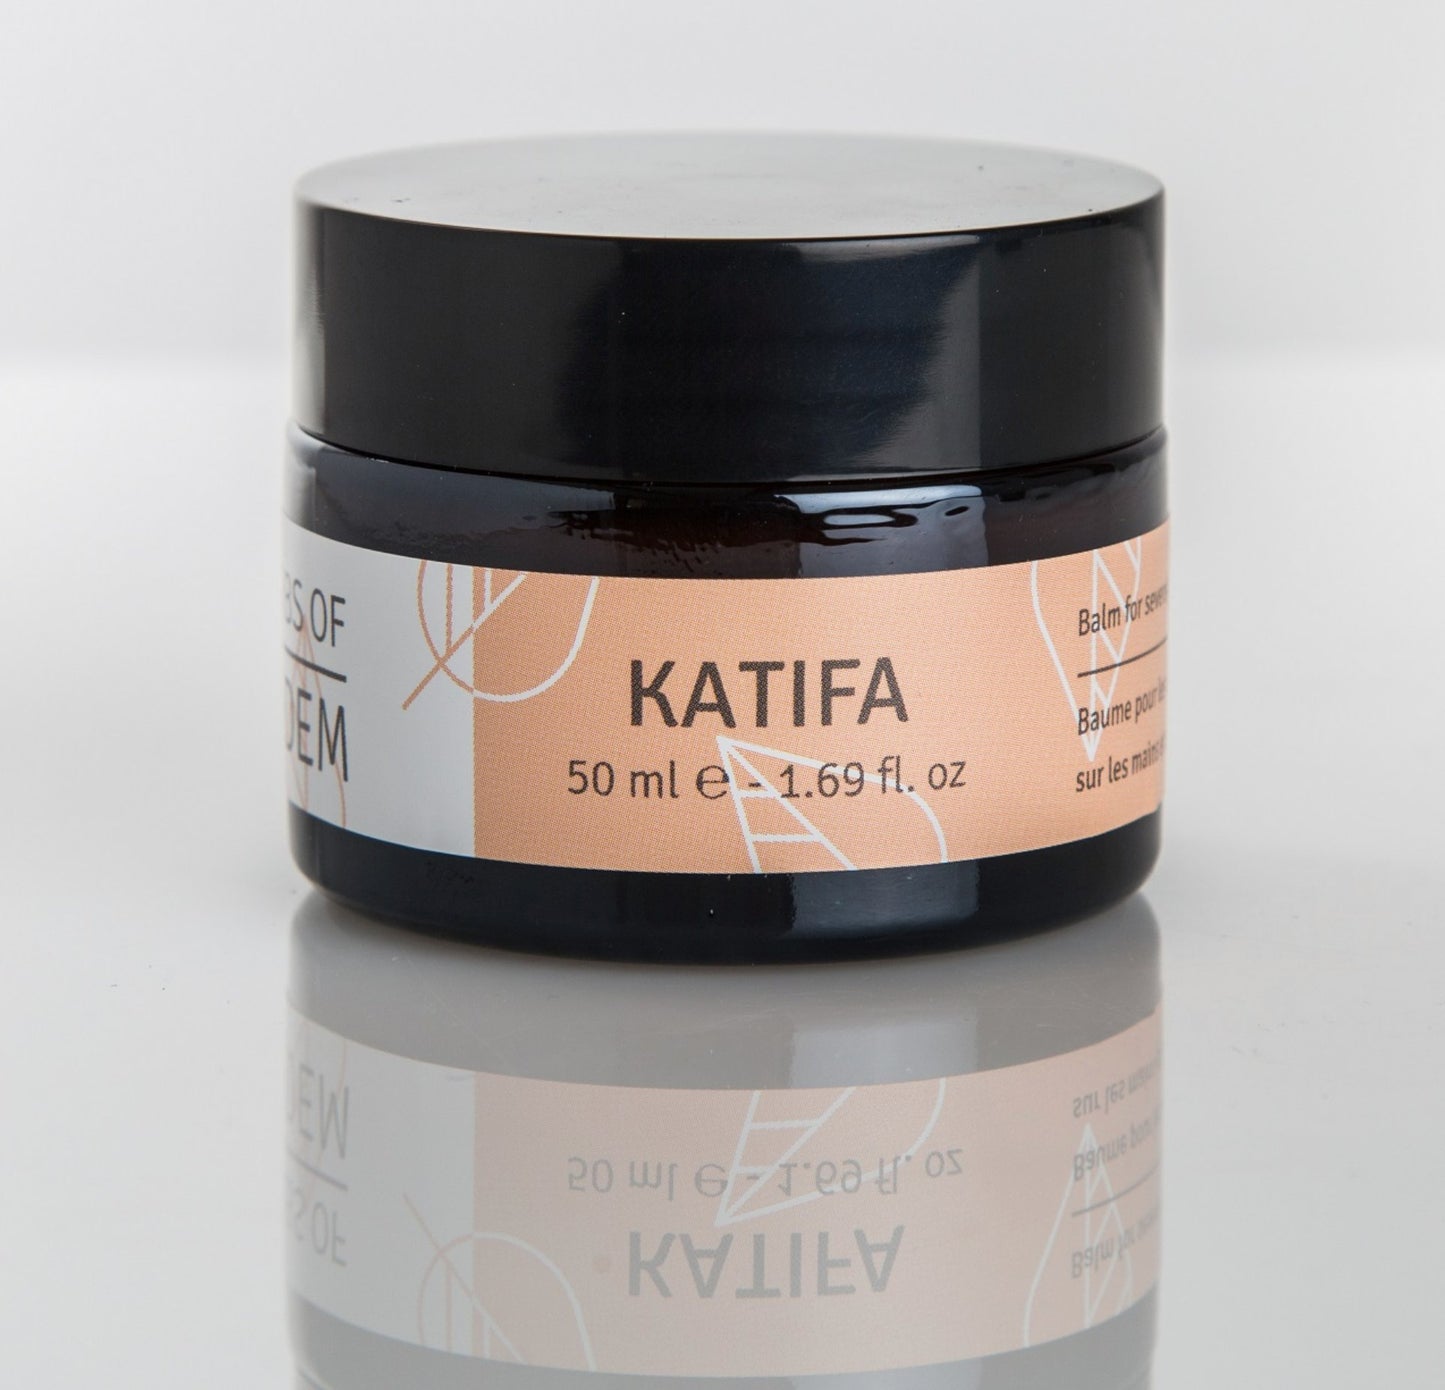 Katifa － Moisturizing balm for dry skin - Kedem Herbs Canada